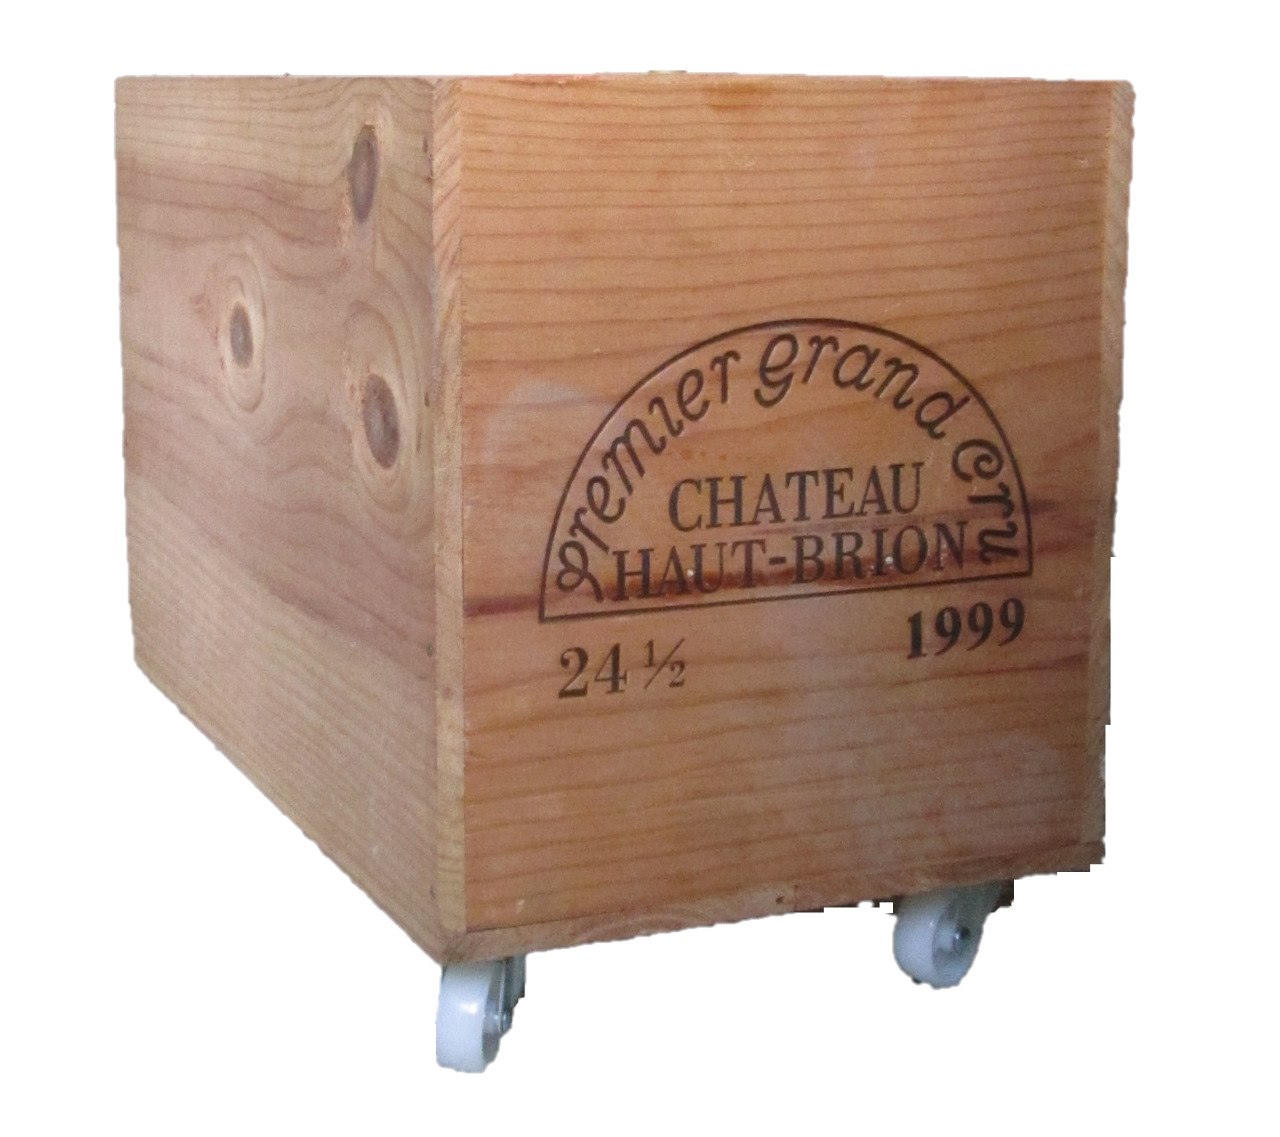 grand fera72 CHATEAU &HALUT-BRIONS 1999 2434  Wood,Plywood,Hardwood,Furniture,Box